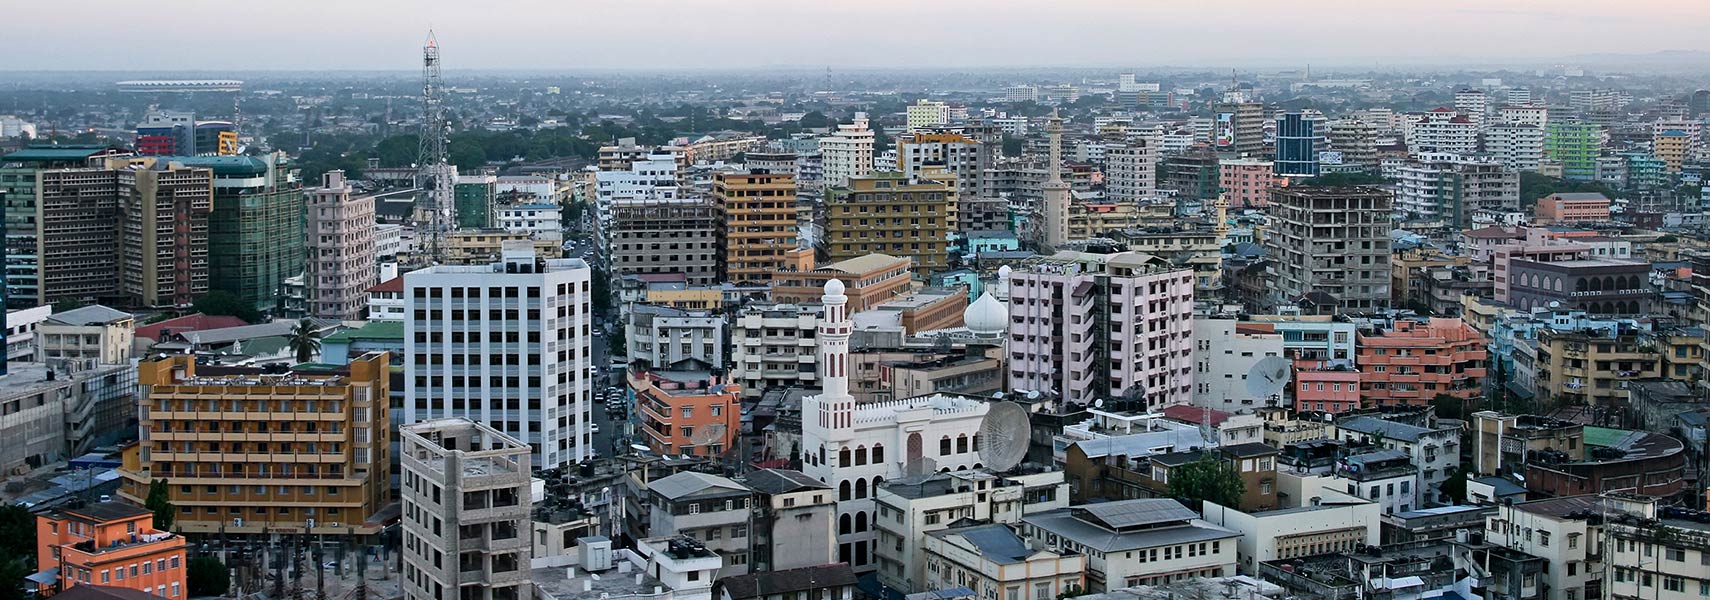 Panorama of Dar es Salaam, Tanzania's economic capital city.